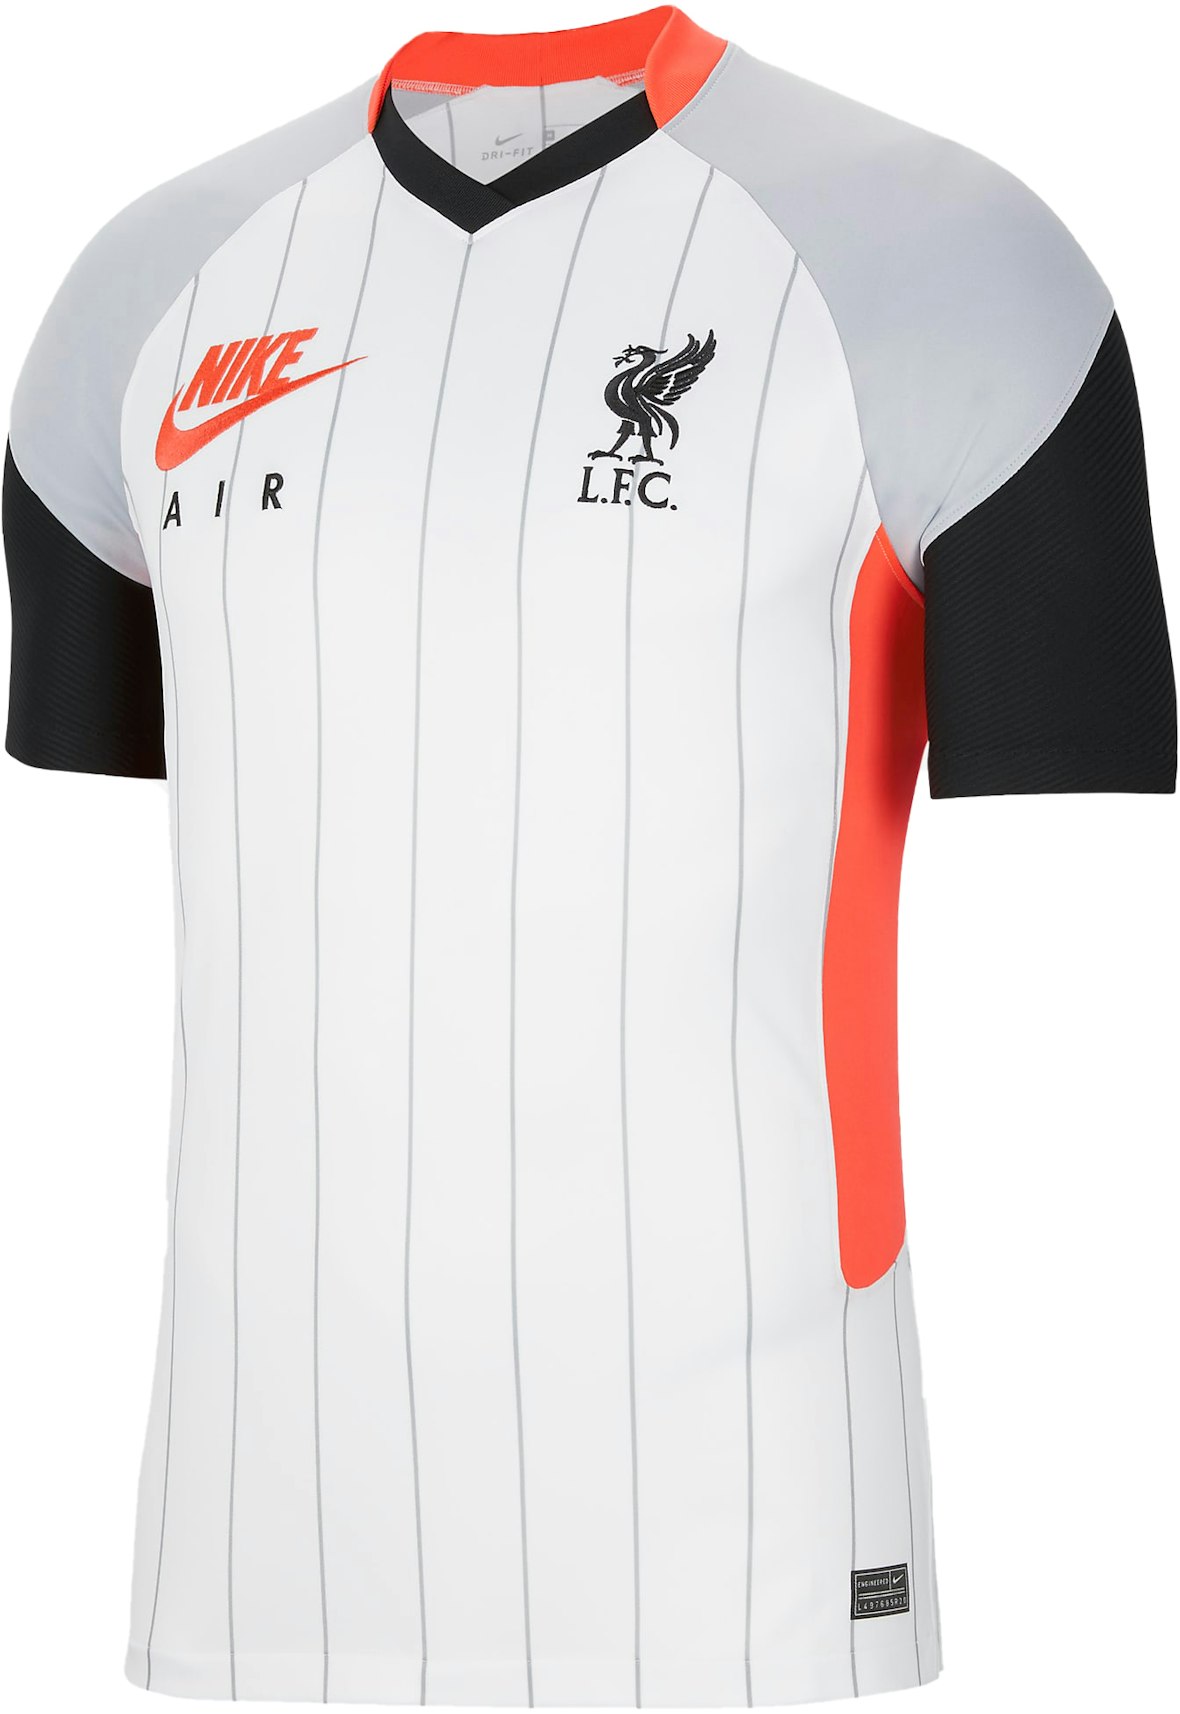 Nike Liverpool F.C. Stadium Air Max Men's Football Shirt White/Laser Crimson/Wolf Grey/Black - SS21 Men's US